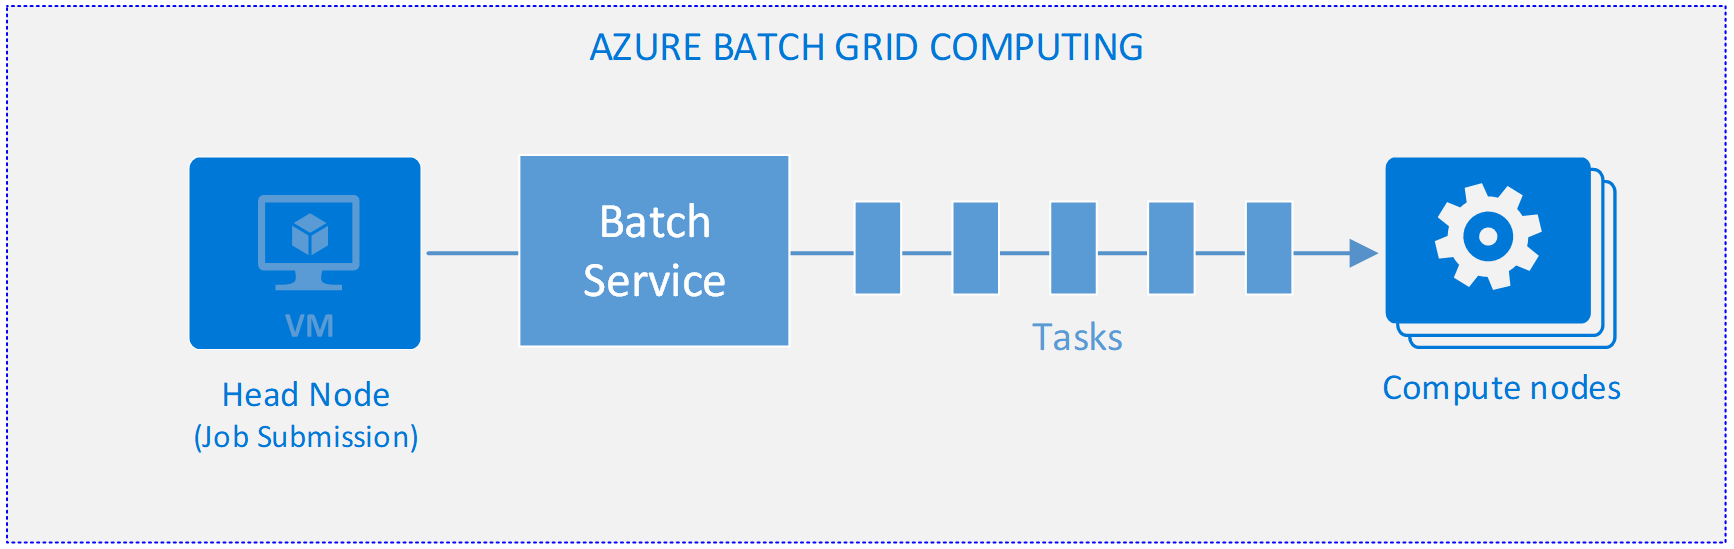 Azure Batch 网格计算的示意图。